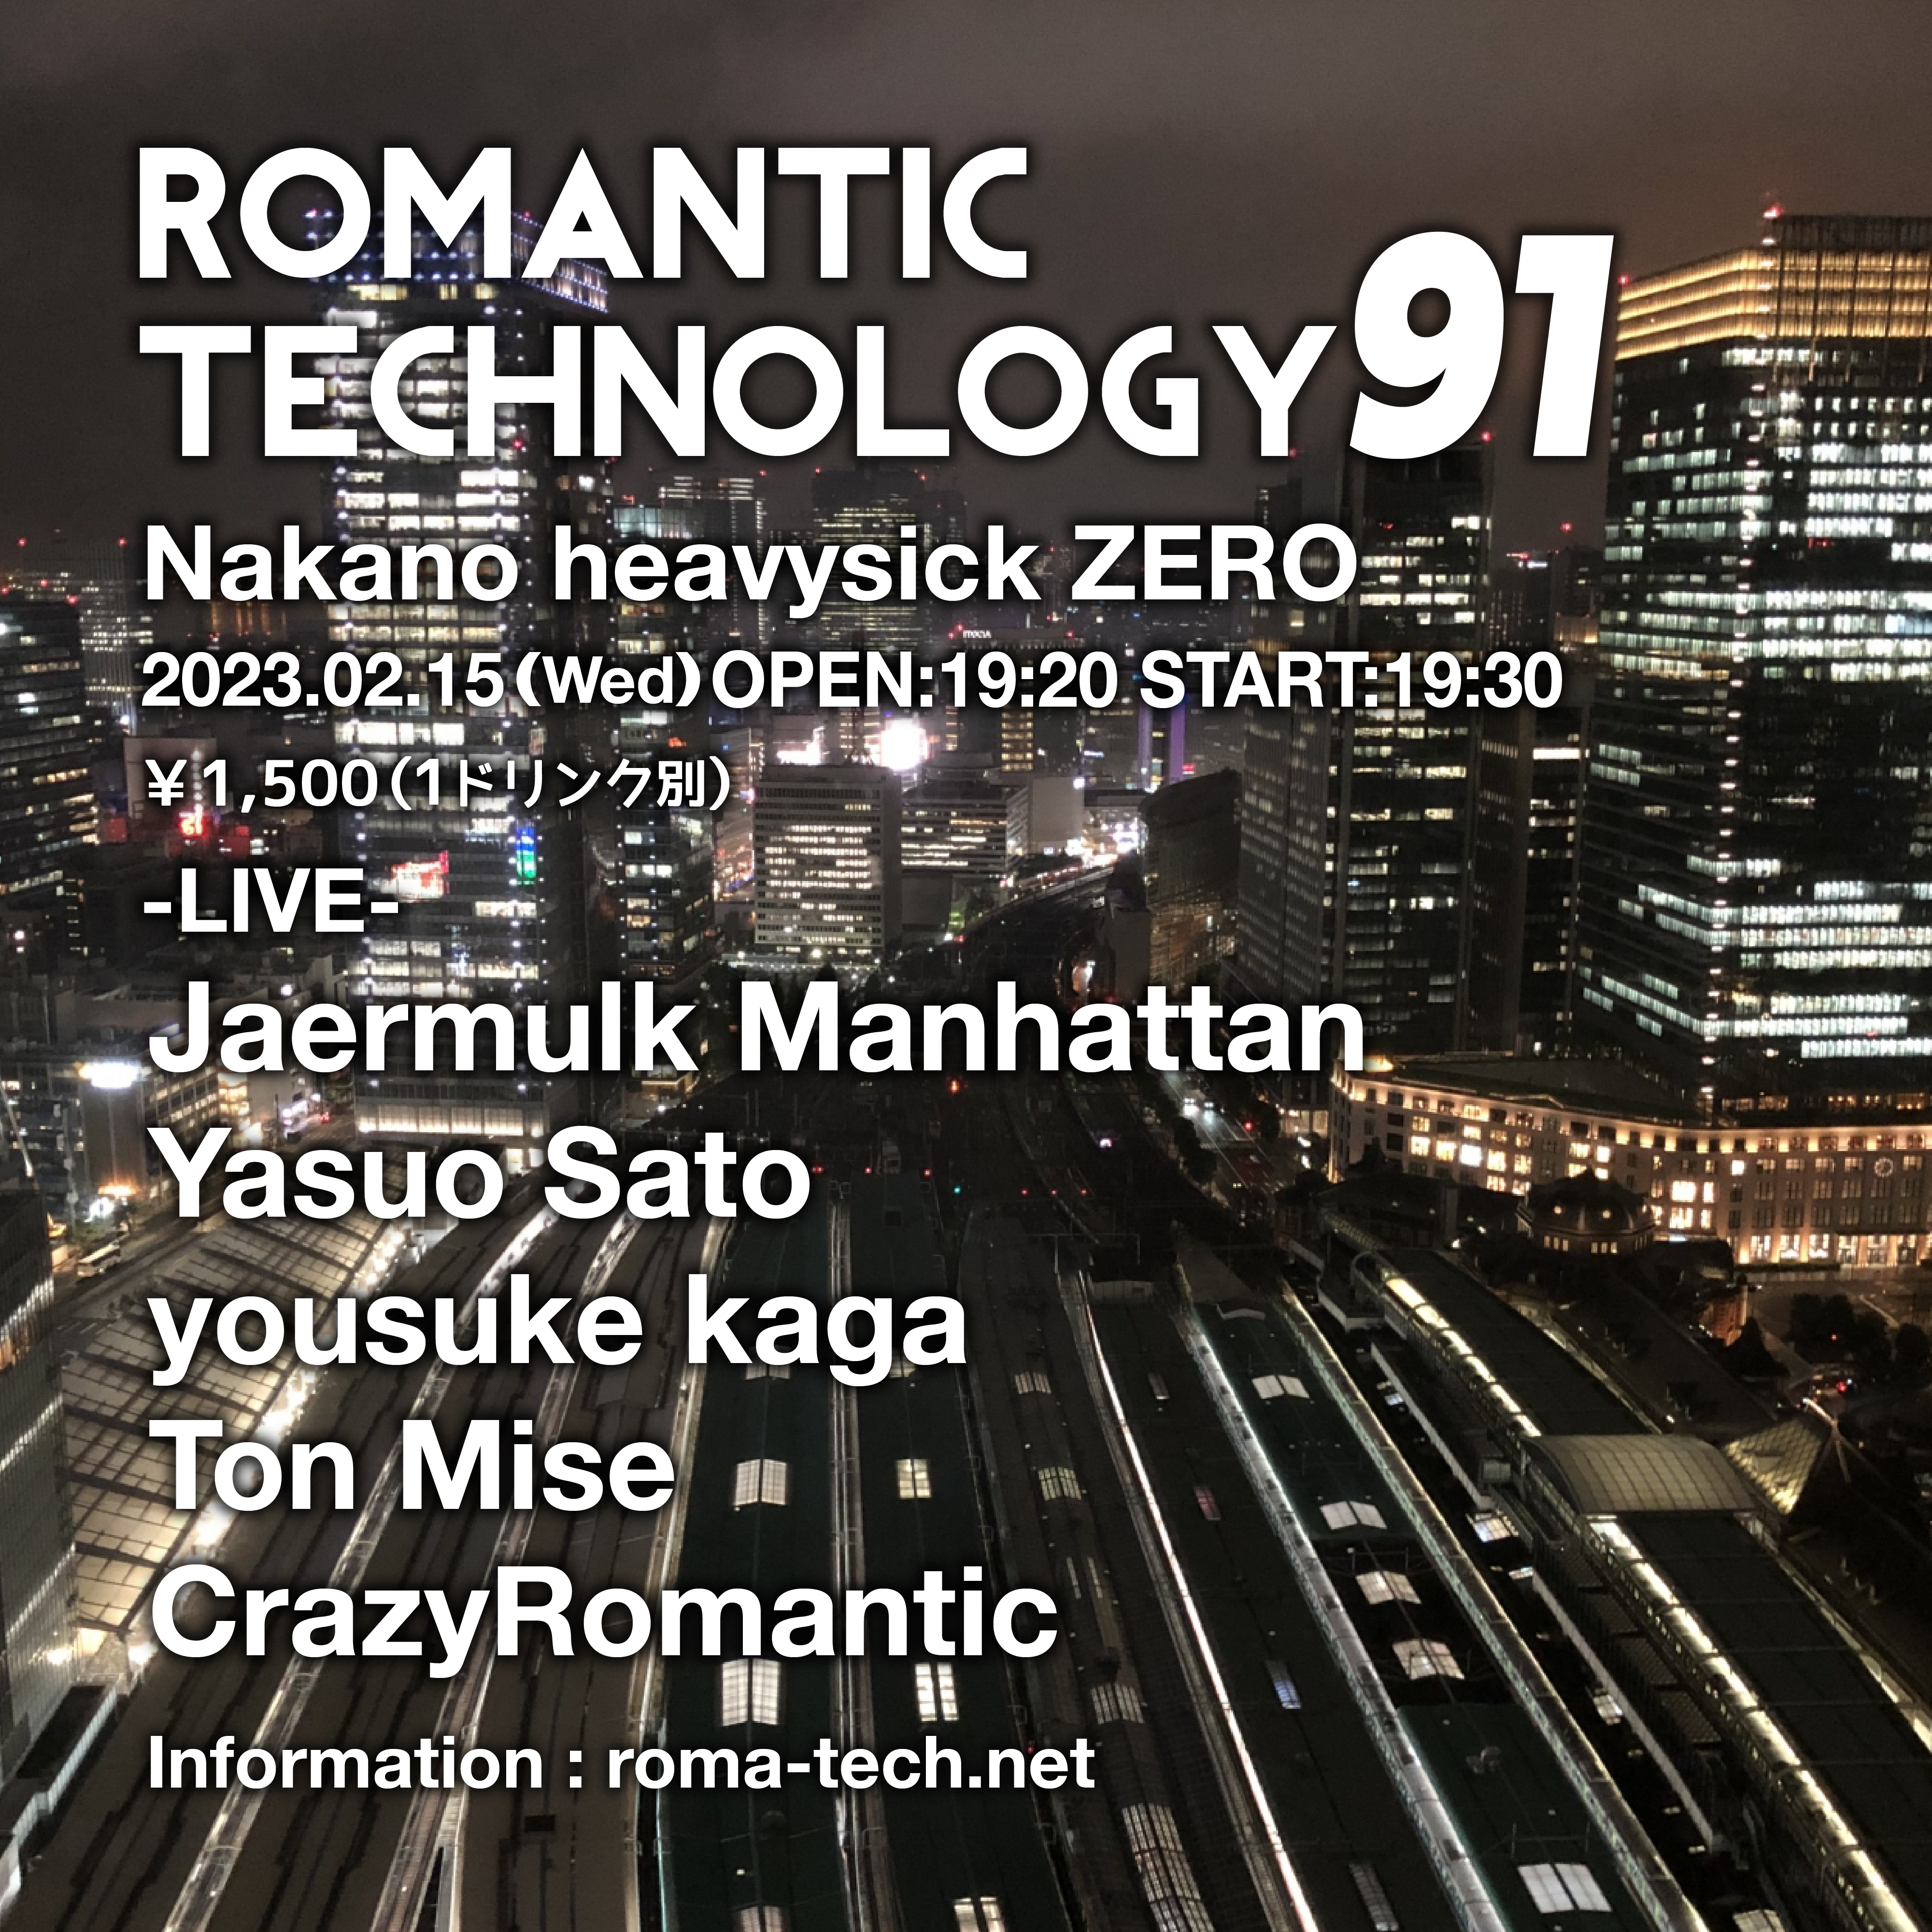  ROMANTIC TECHNOLOGY 91